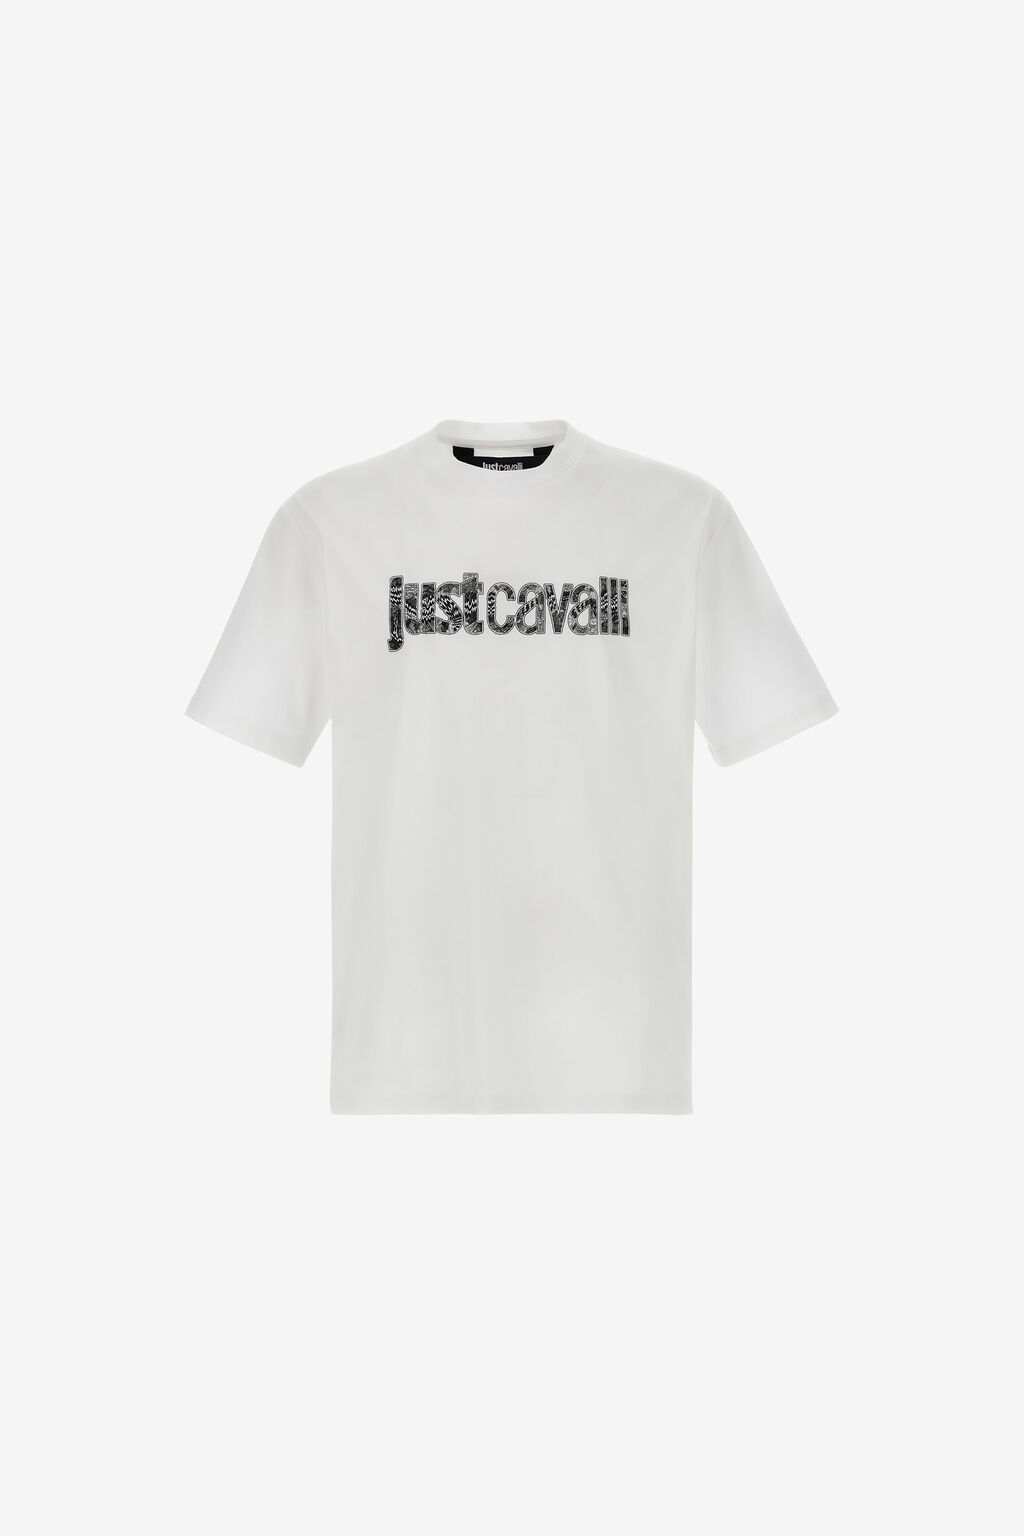 Just Cavalli 75Oahg05 Cj300 R Logo Knitt T-Shirt White